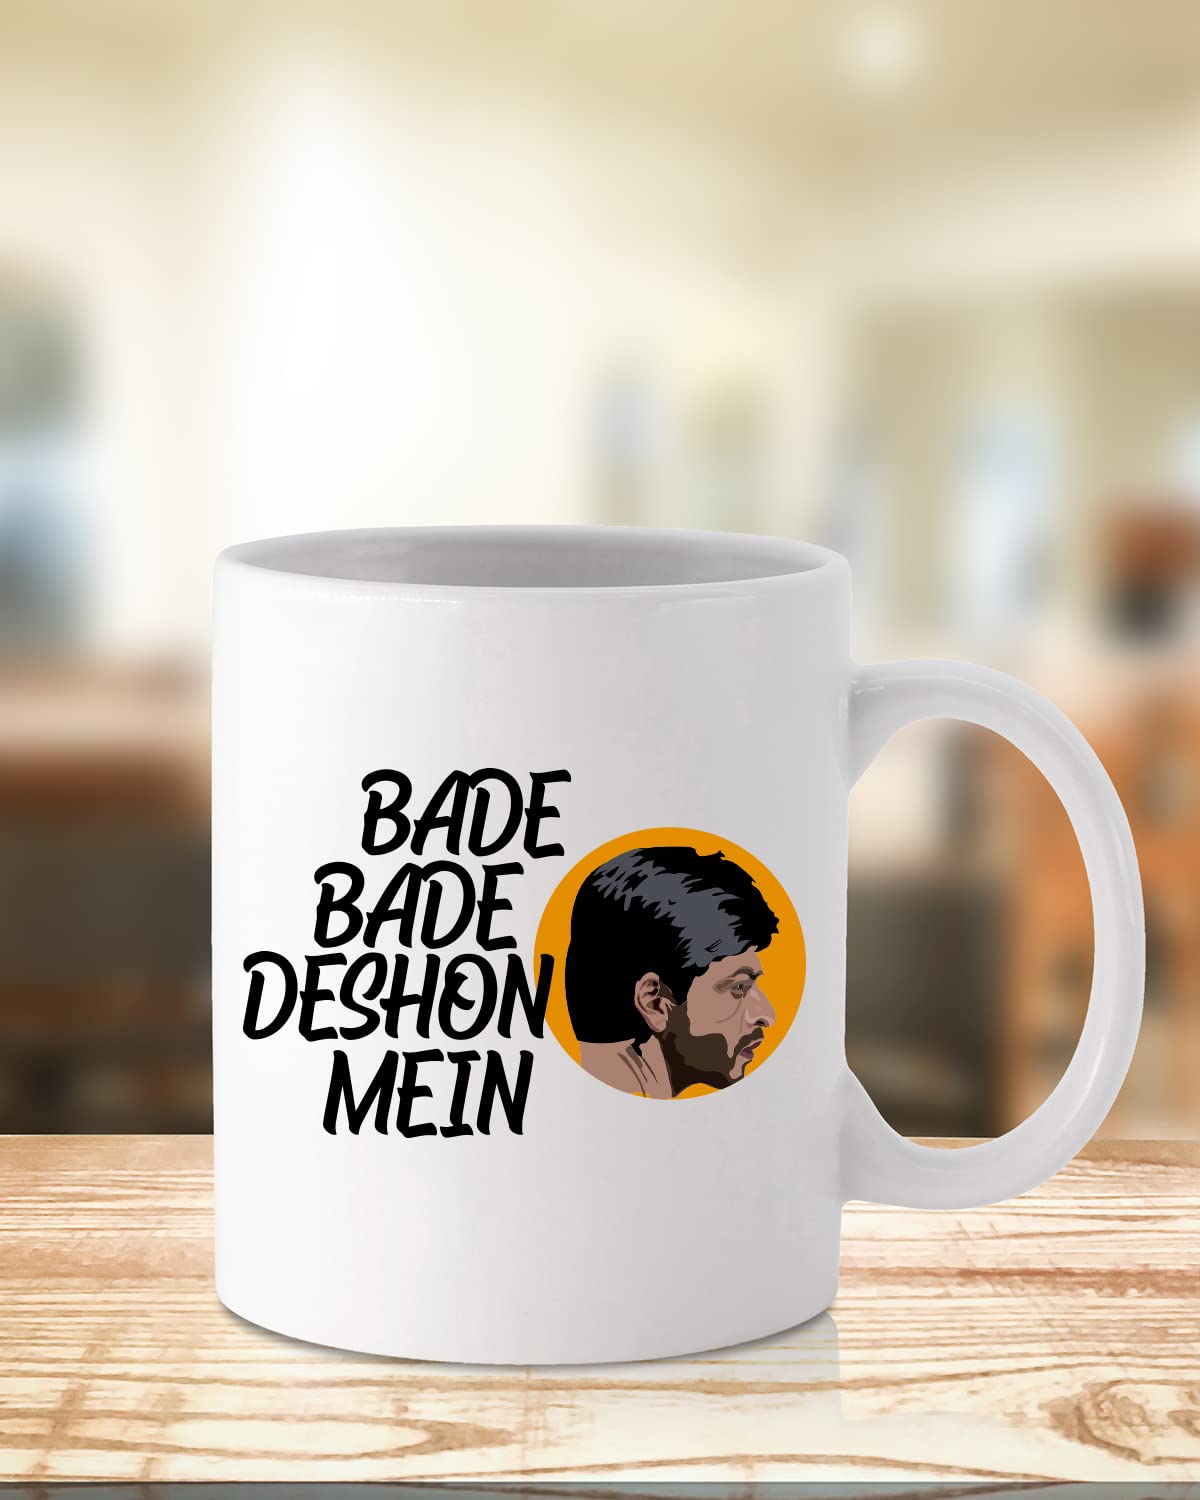 BADE BADE Deshon Mein Coffee Mug - Gift for Friend, Birthday Gift, Birthday Mug, Motivational Quotes Mug, Mugs with Funny & Funky Dialogues, Bollywood Mugs, Funny Mugs for Him & Her